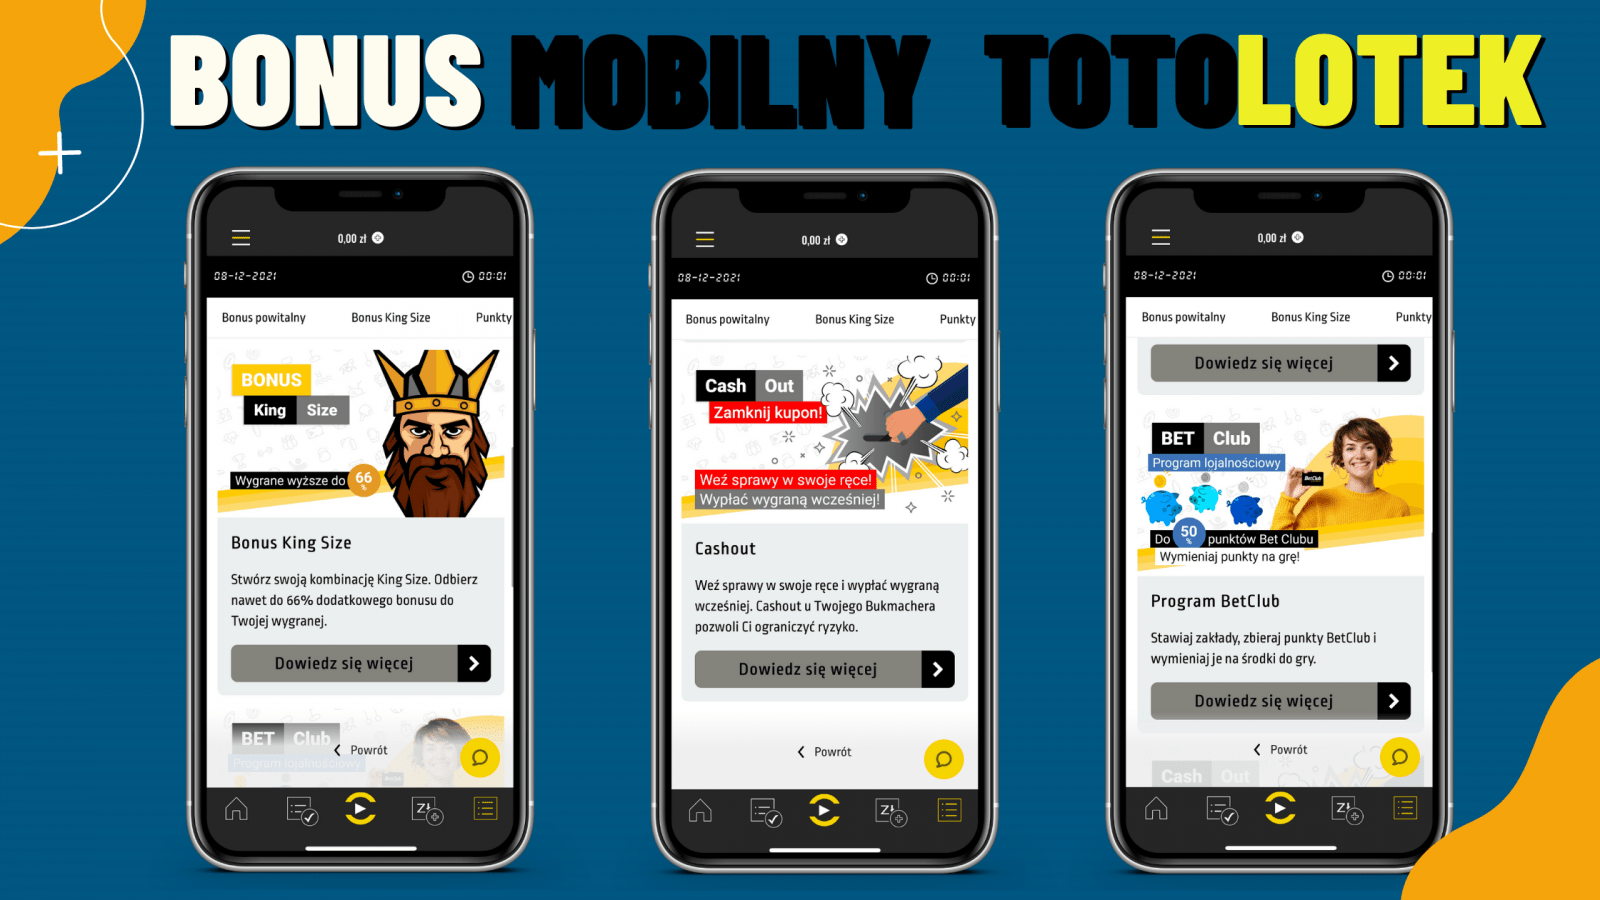 Bonus mobilny w Totolotek